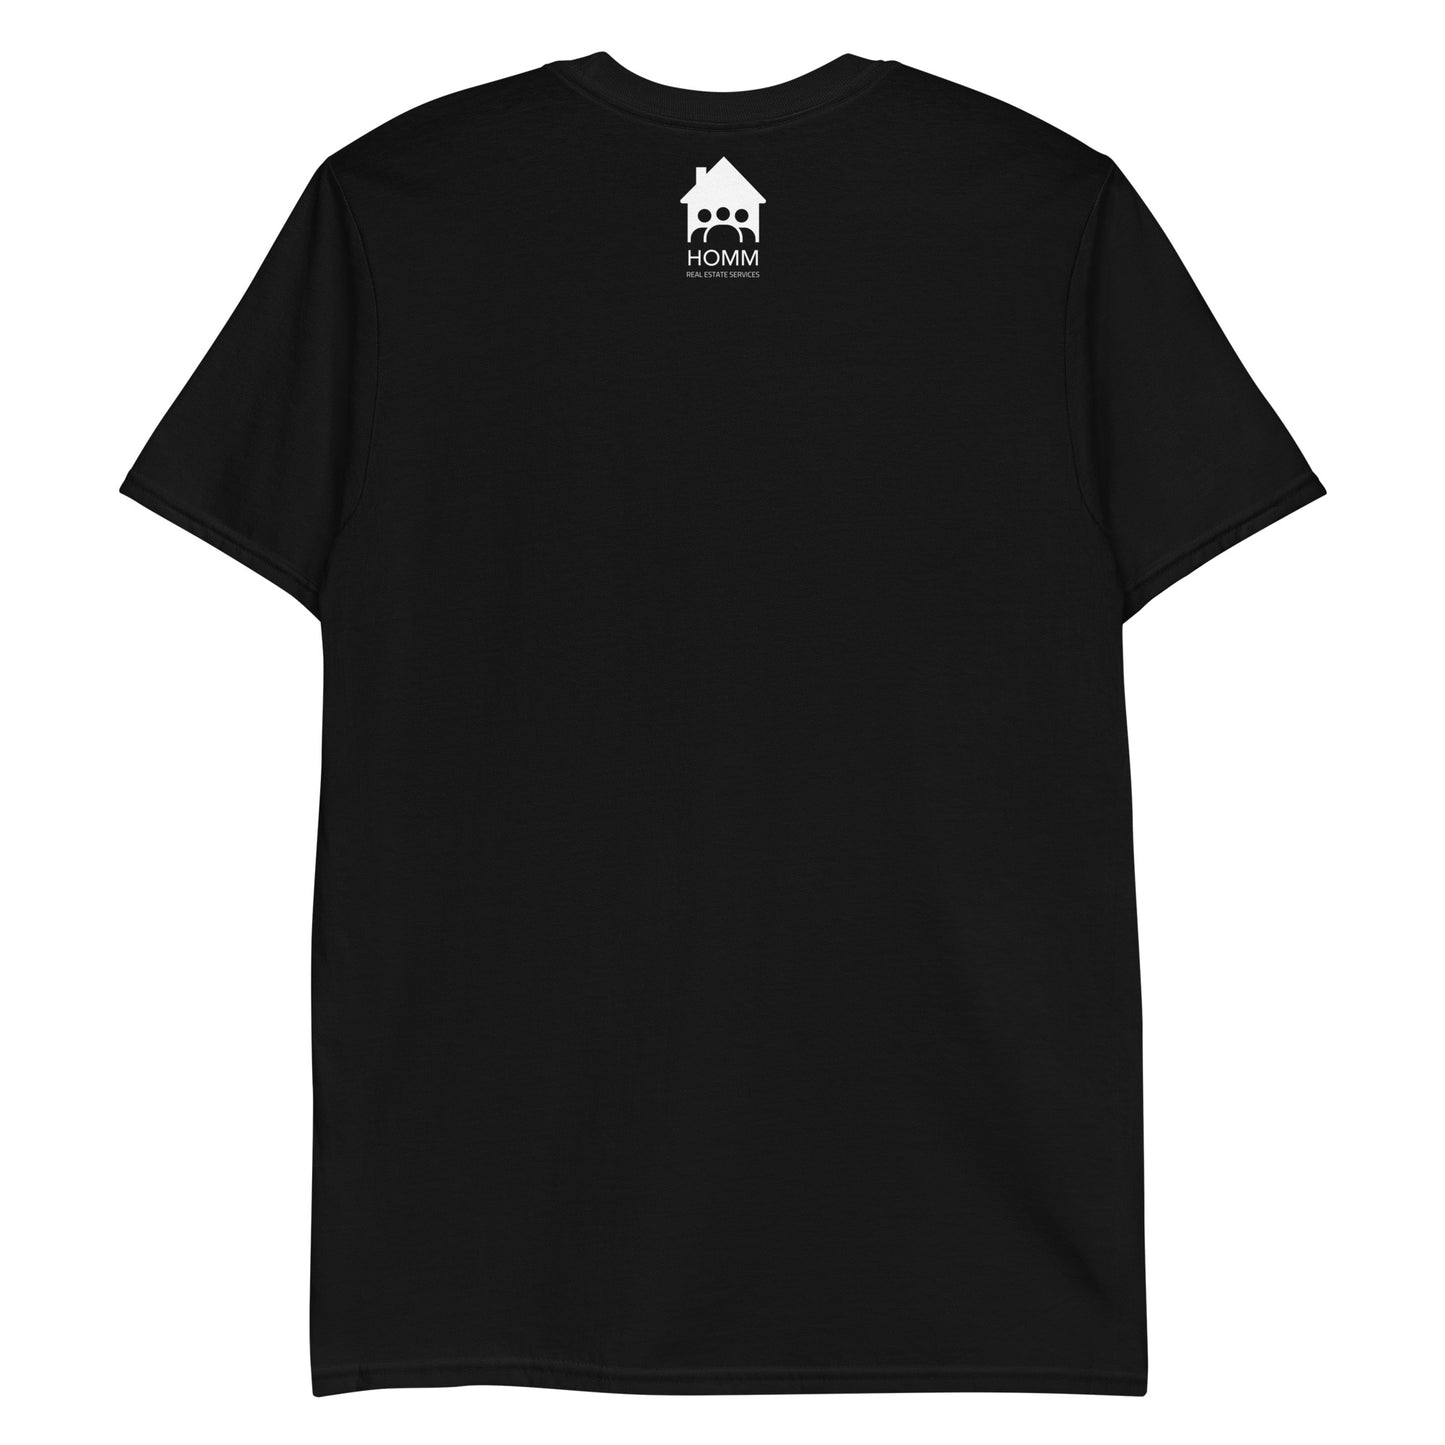 HOMM Tee Short-Sleeve Unisex T-Shirt